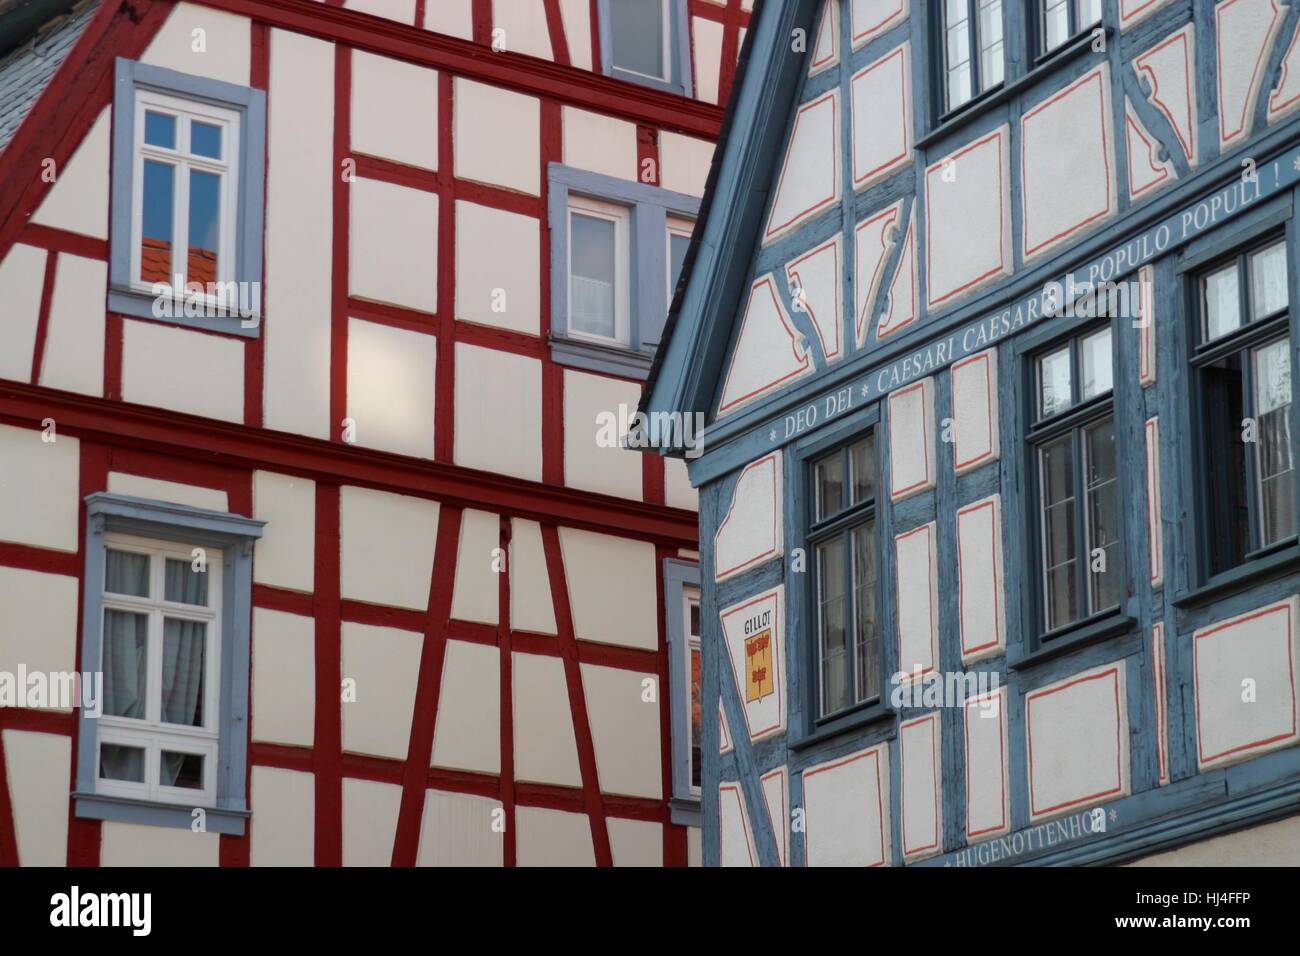 Half timbered houses in Oppenheim, Rhineland Palatinate, Germany Stock Photo